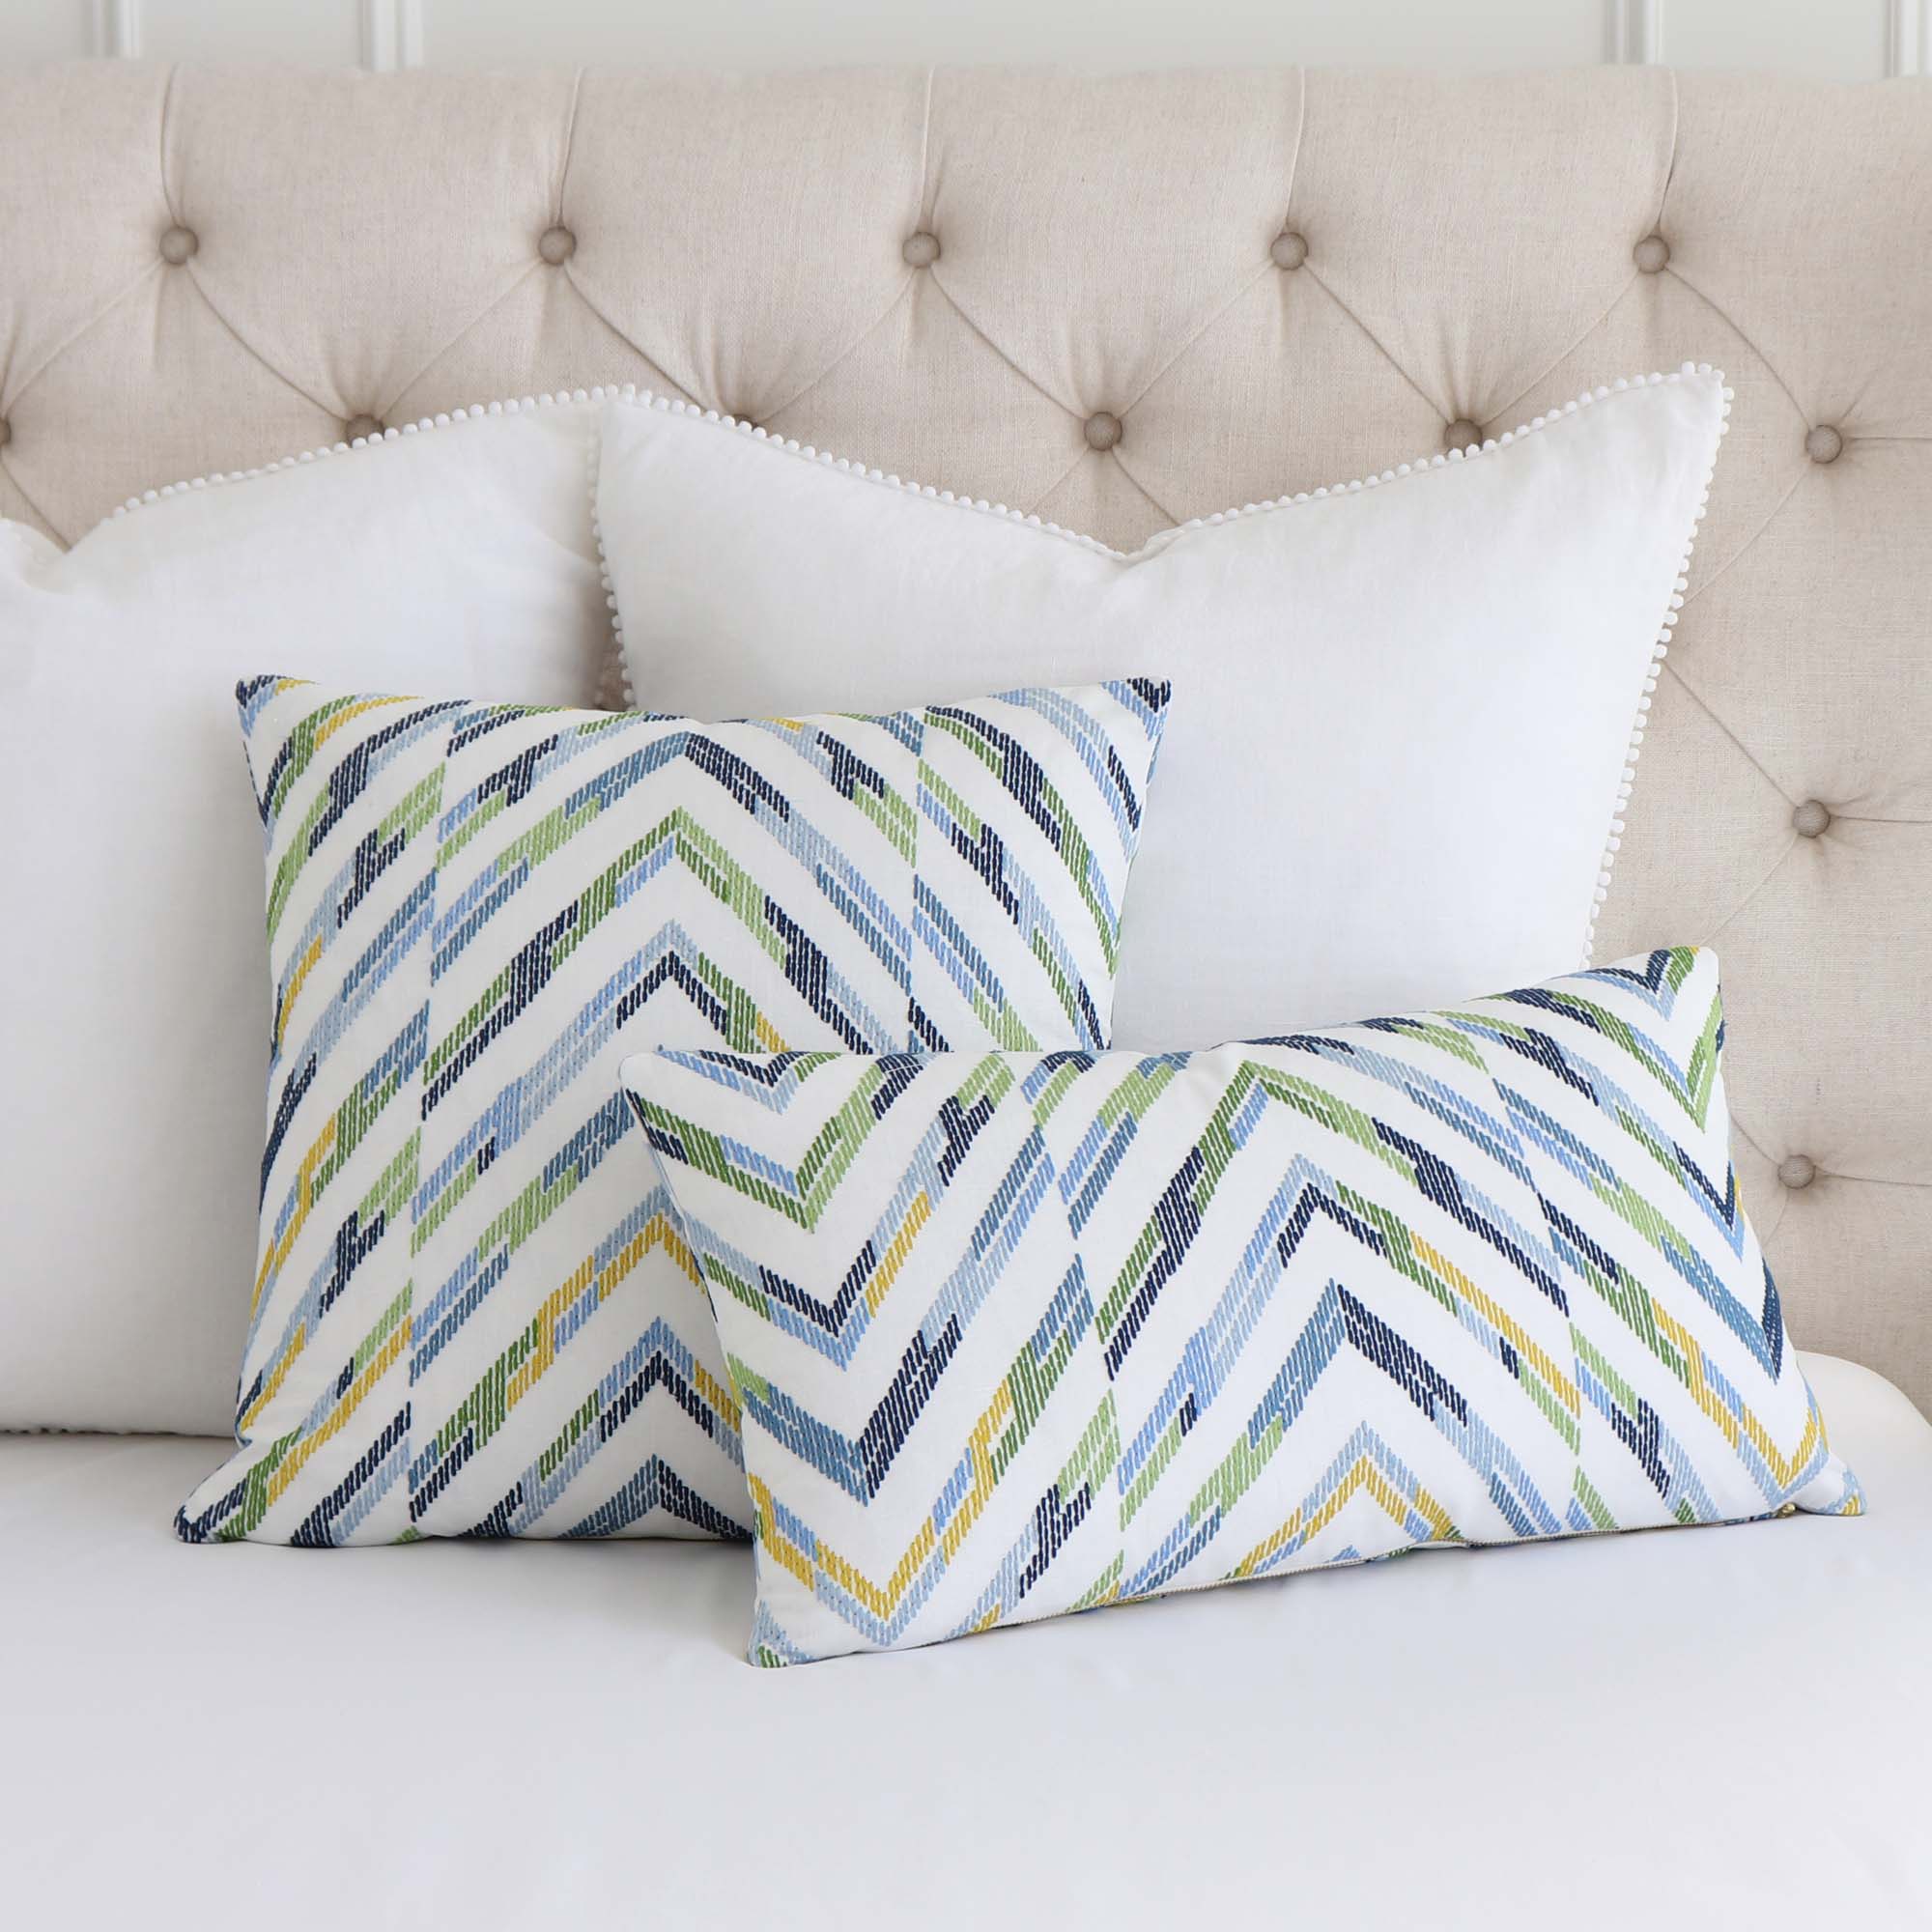 Thibaut Hamilton Textured Embroidery Geometric Blue and Yellow Designer Throw Pillow Cover with White Pom Pom Euro Shams